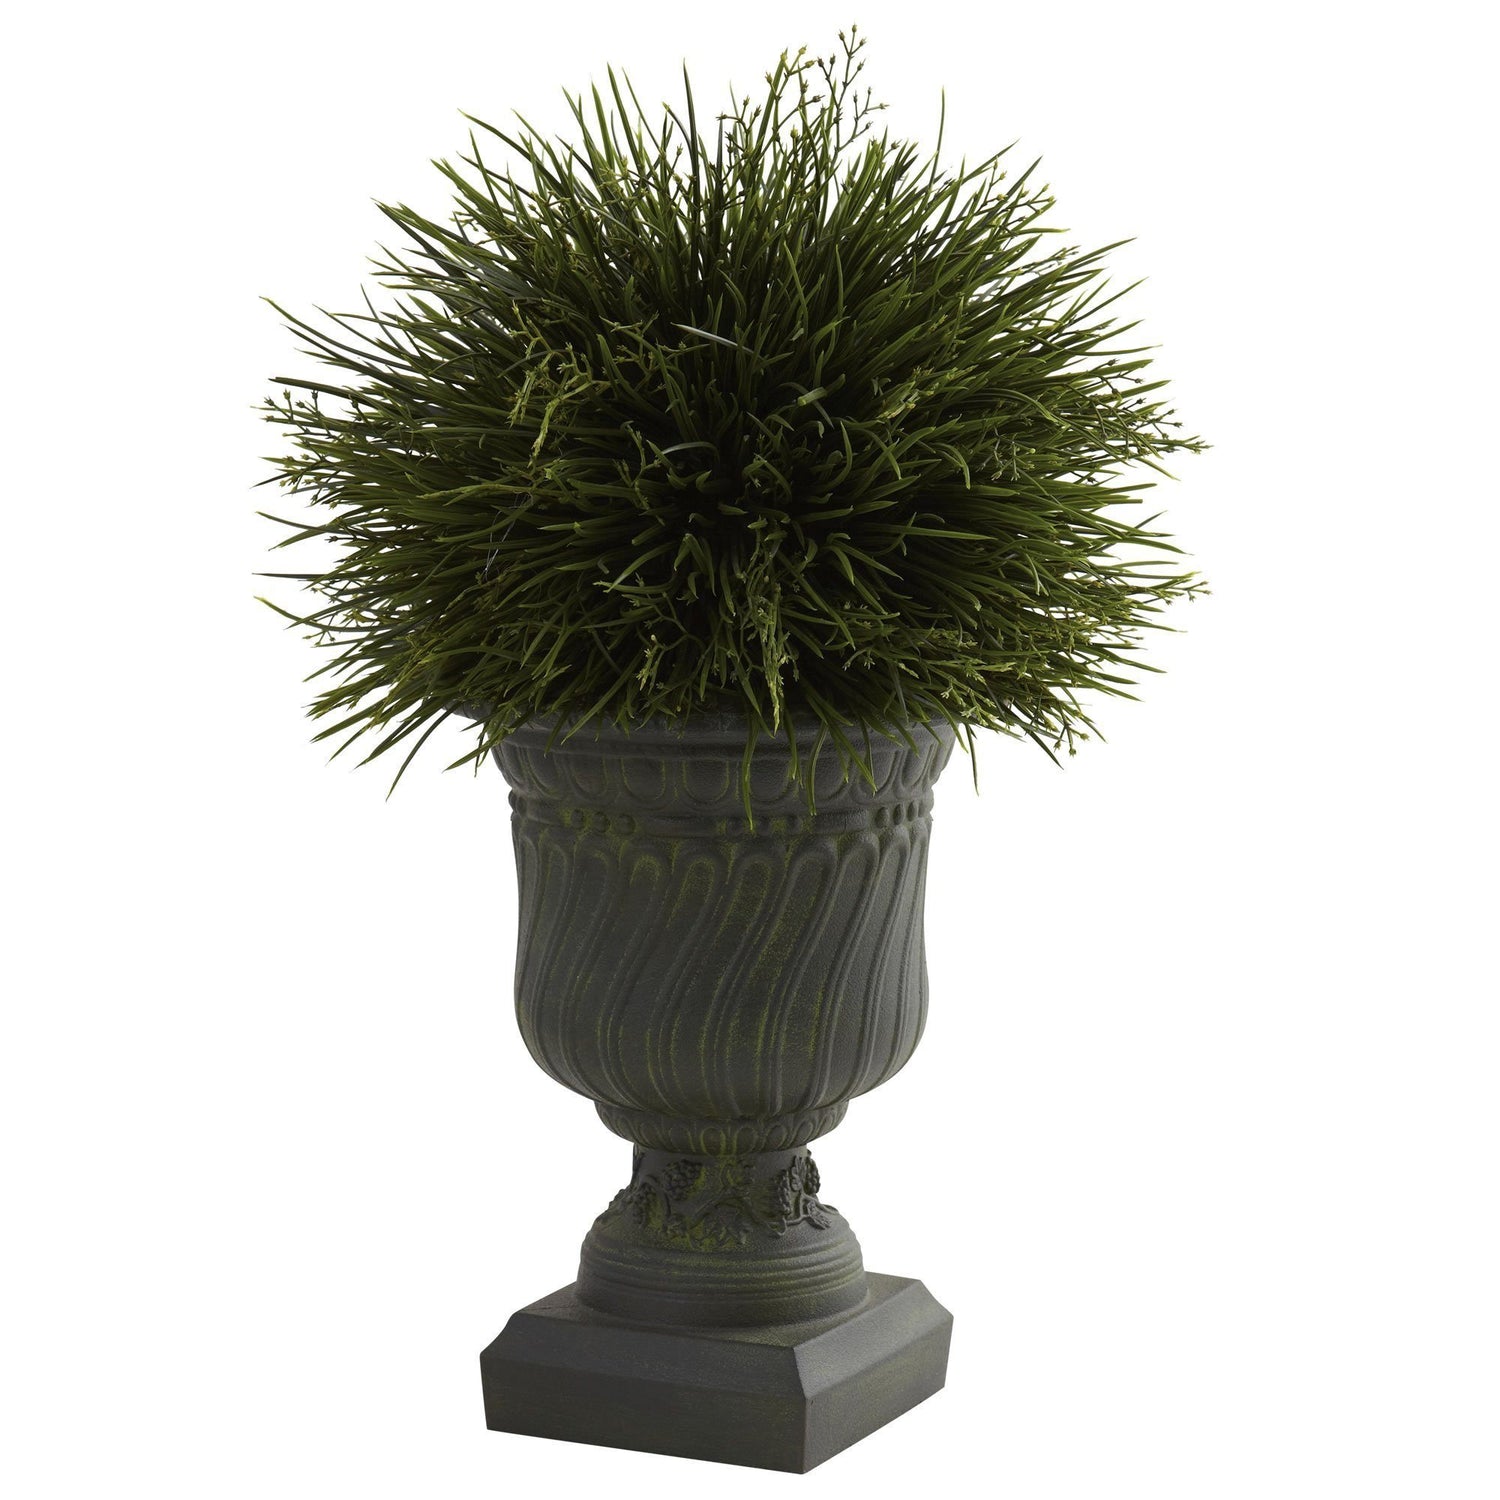 Potted Grass w/Decorative Urn (Indoor/Outdoor)